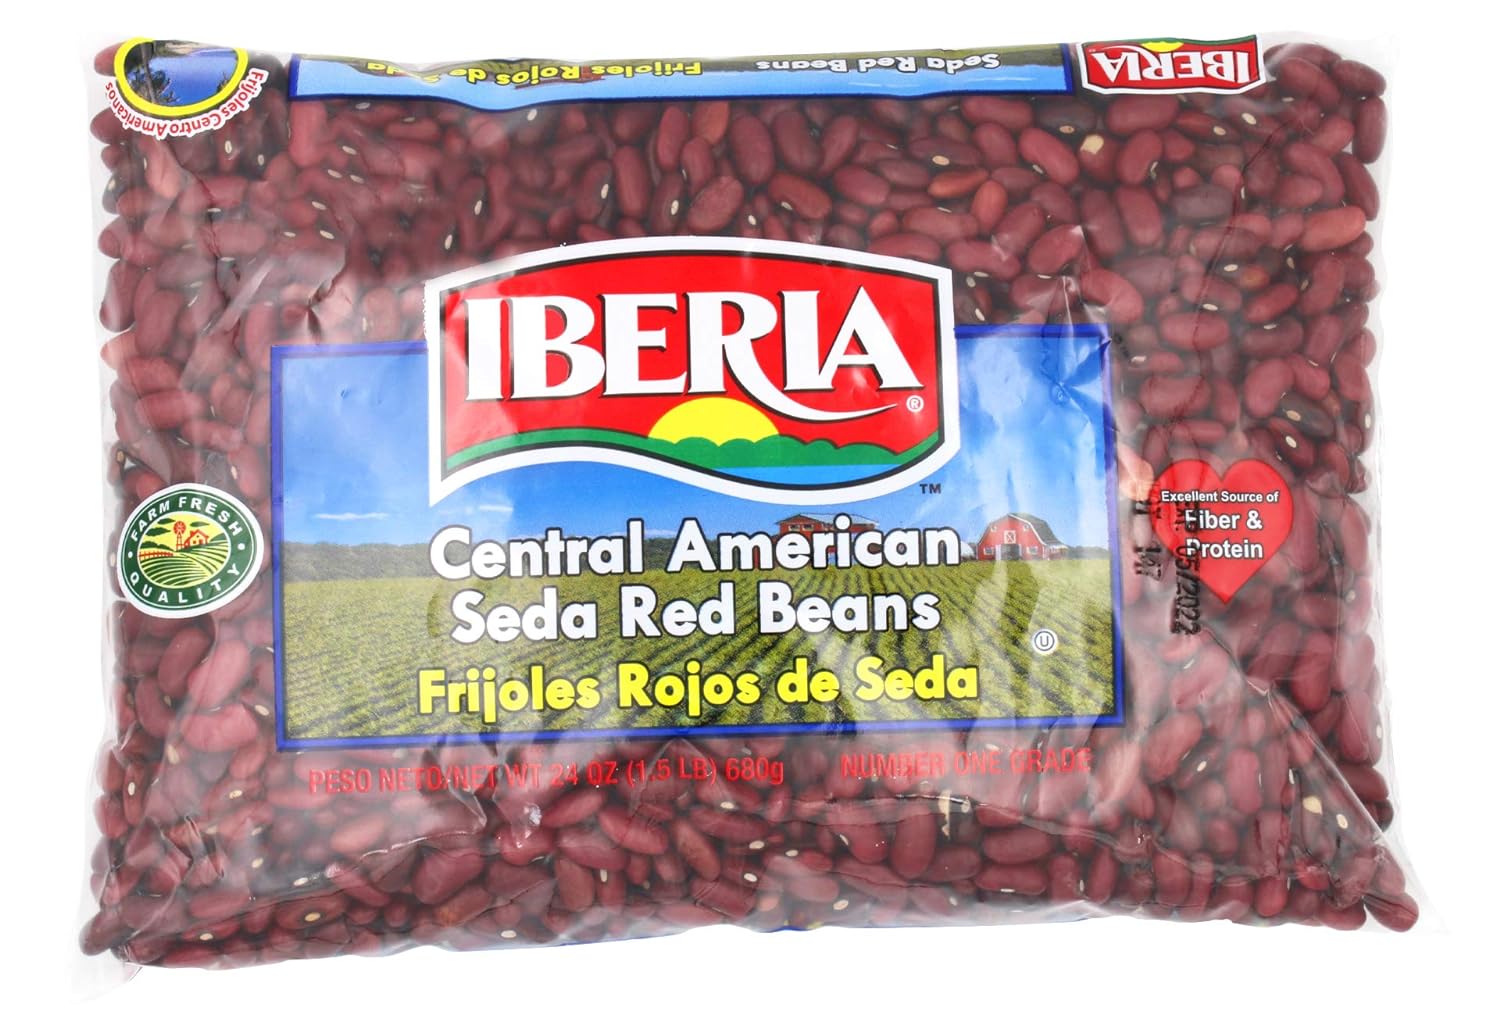 Iberia Central American Seda Red Beans Frijoles Rojos de Seda, 1.5 Pound (Pack of 1)